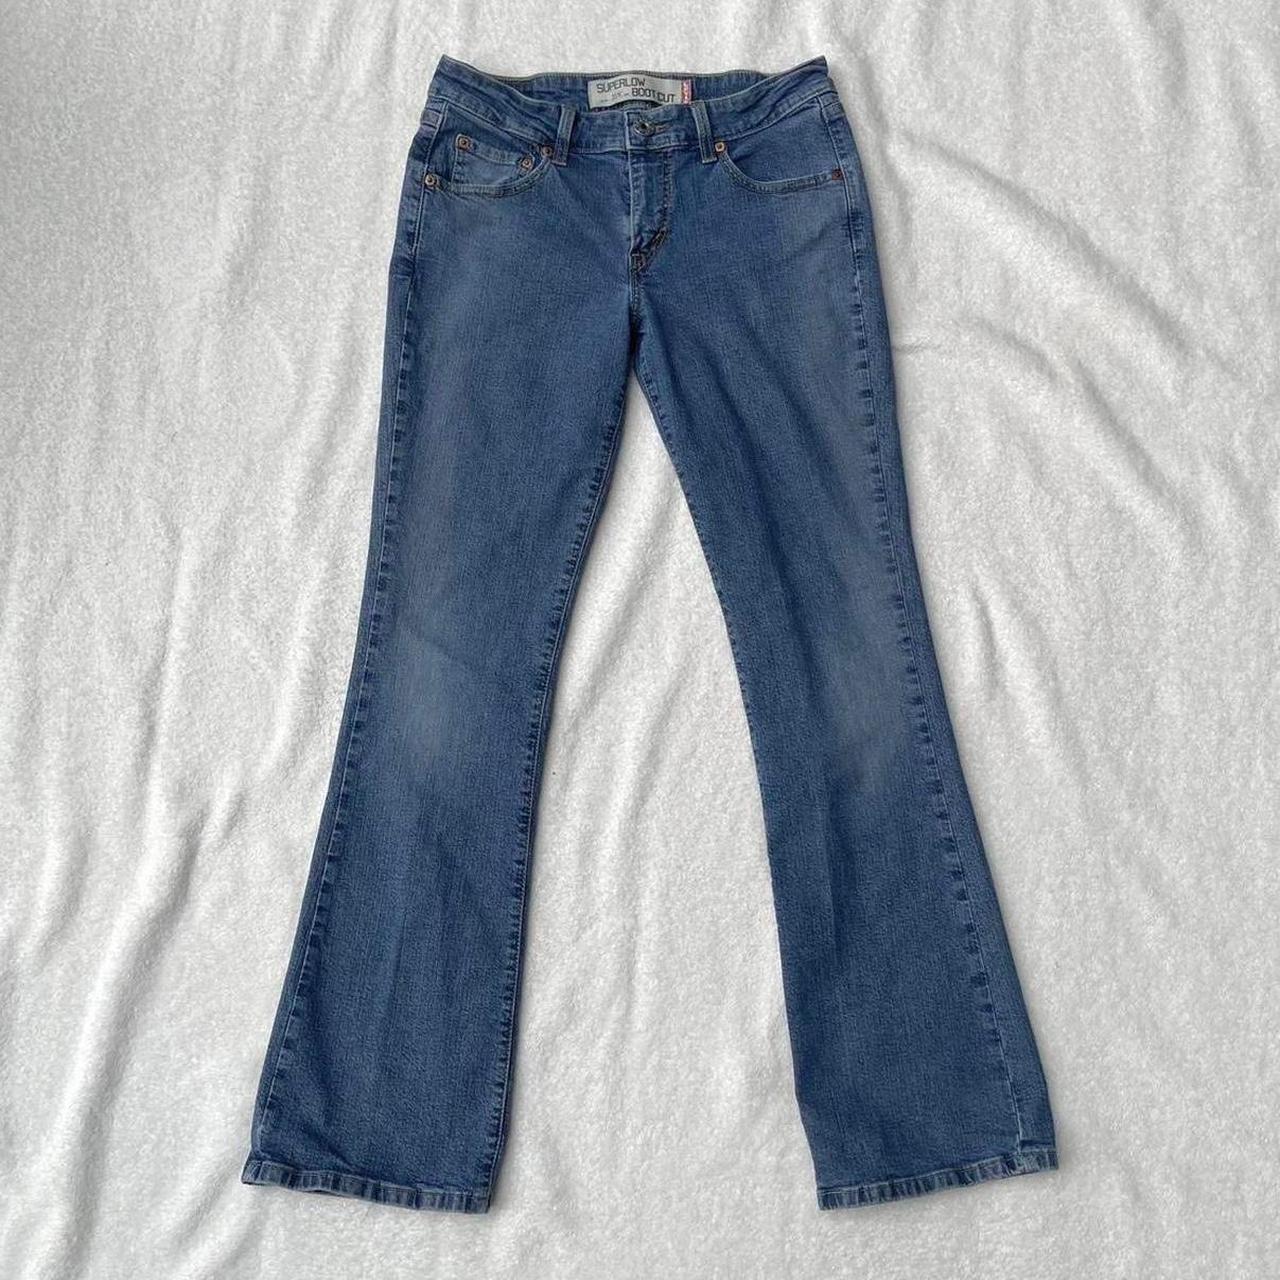 Levi’s Superlow Bootcut Jeans A pair of medium wash... - Depop